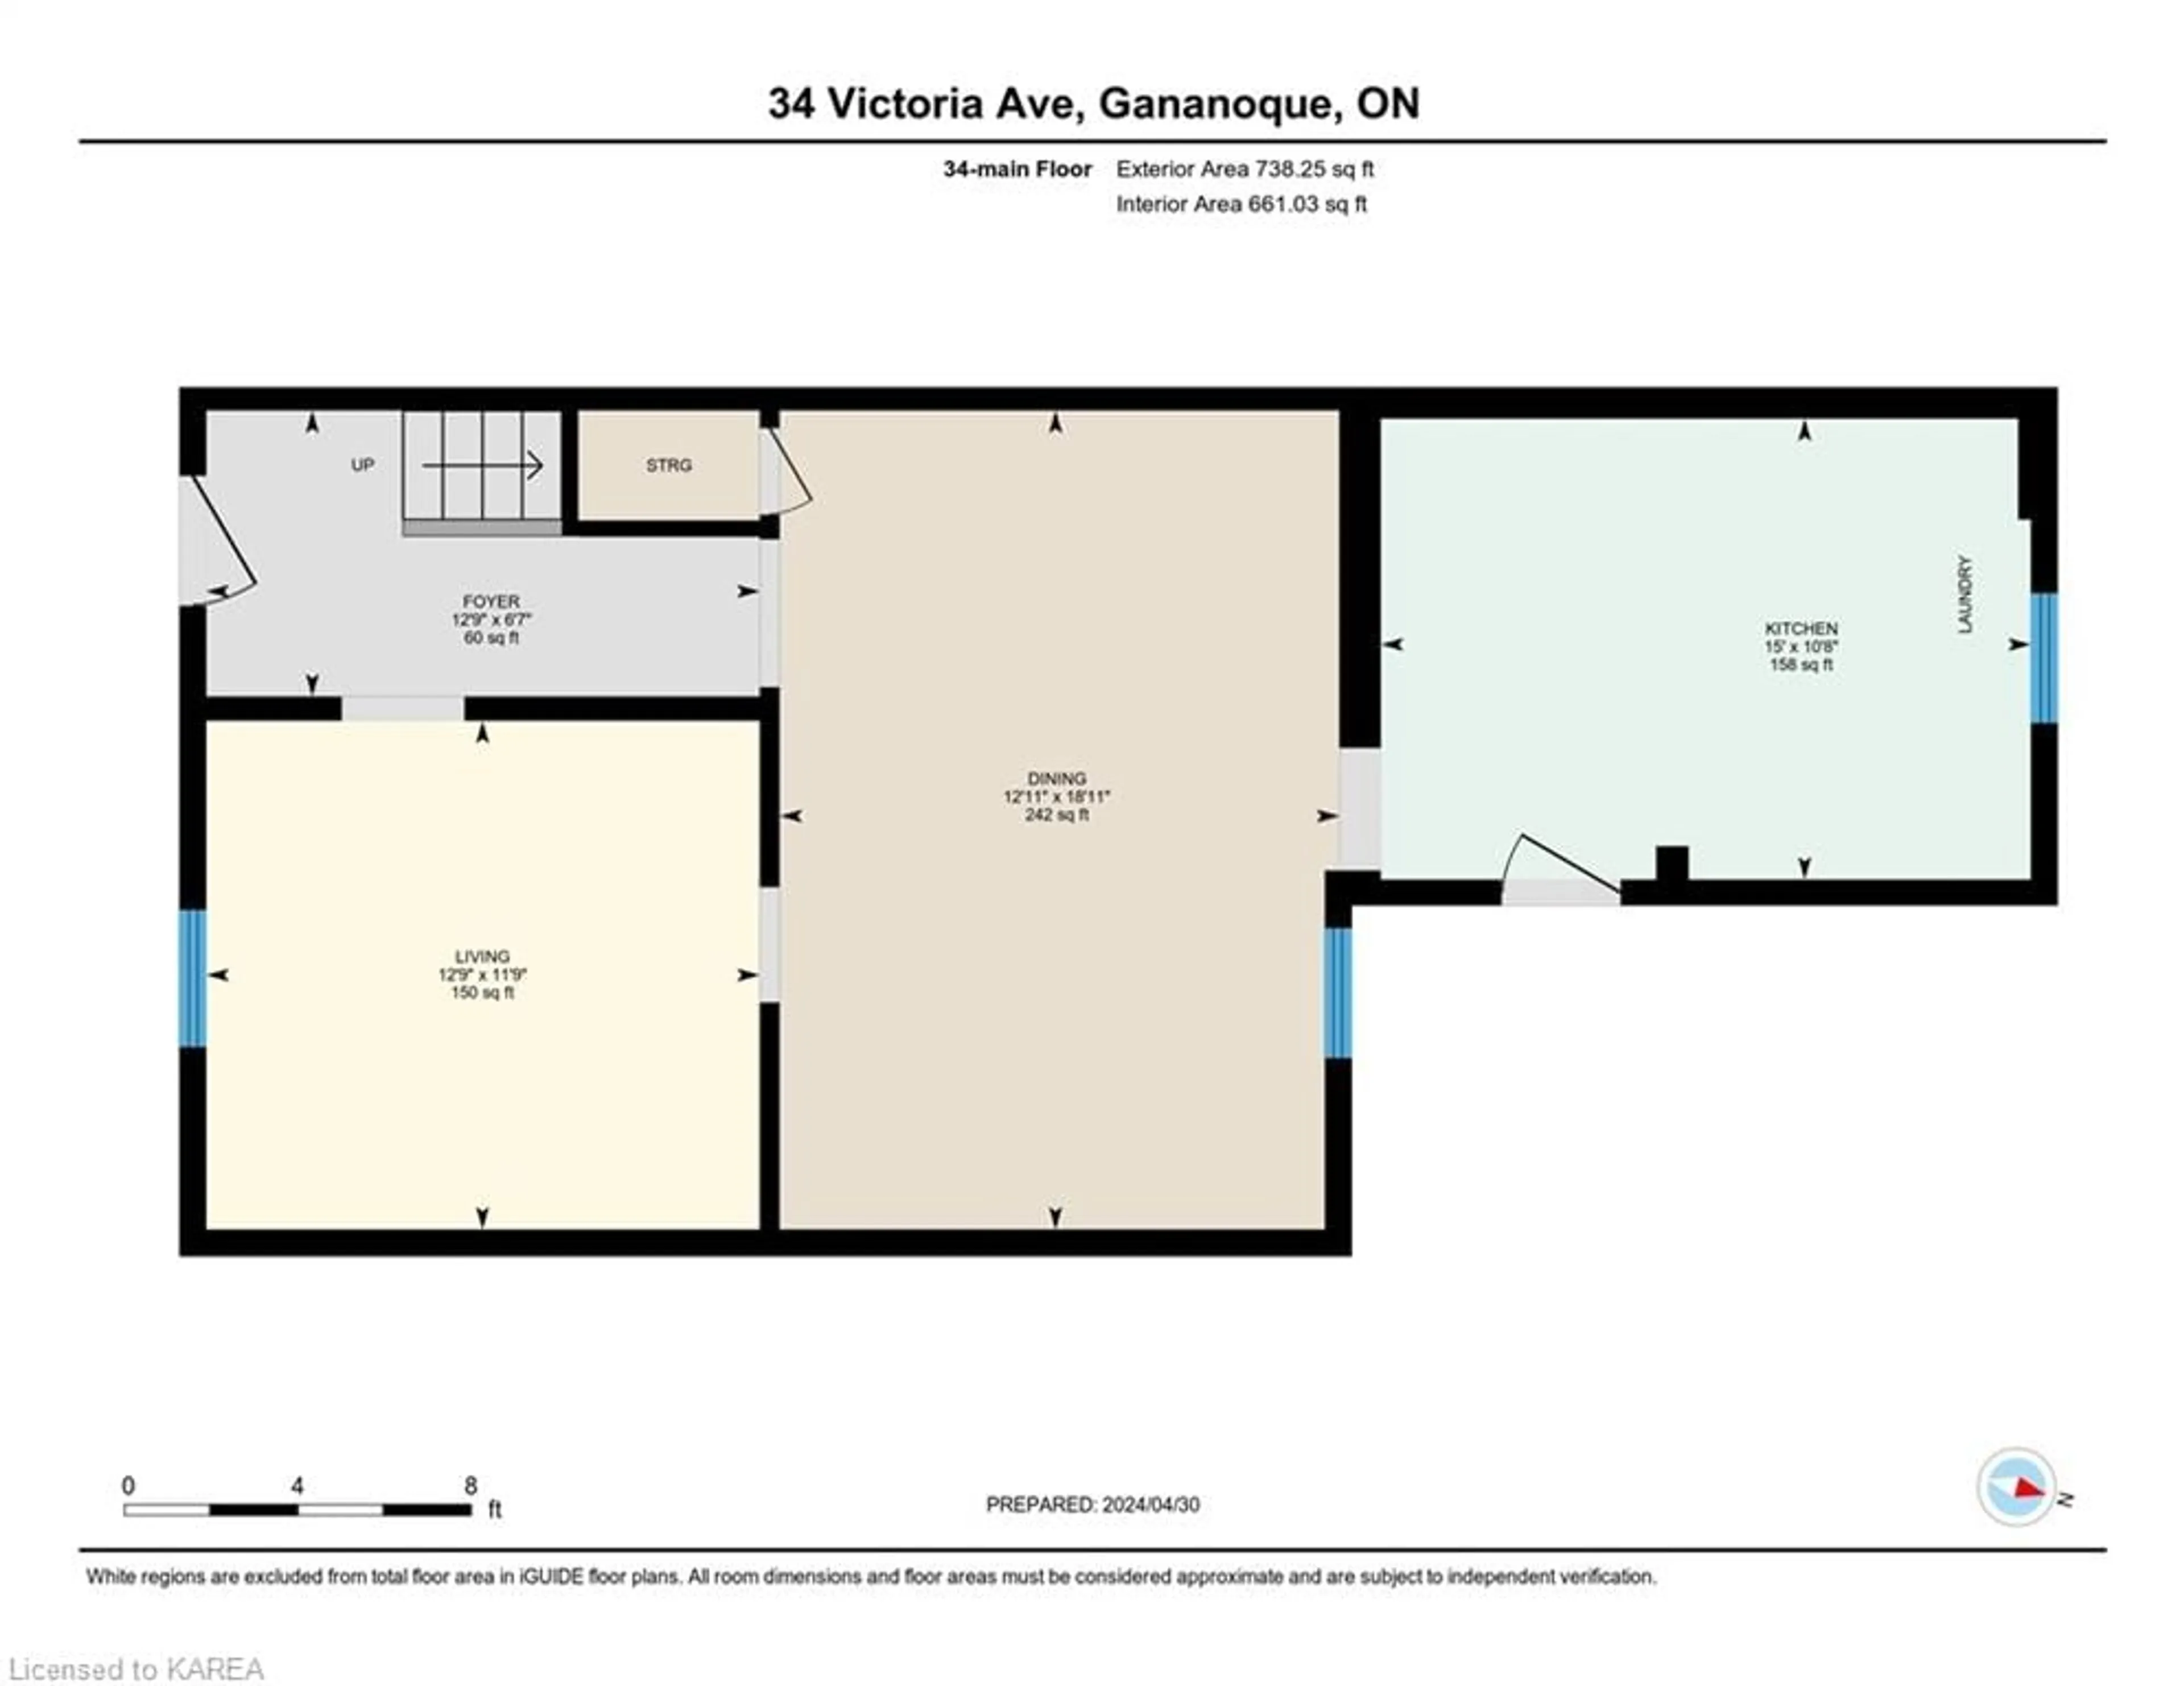 Floor plan for 30-32-34 Victoria Ave, Gananoque Ontario K7G 2R8